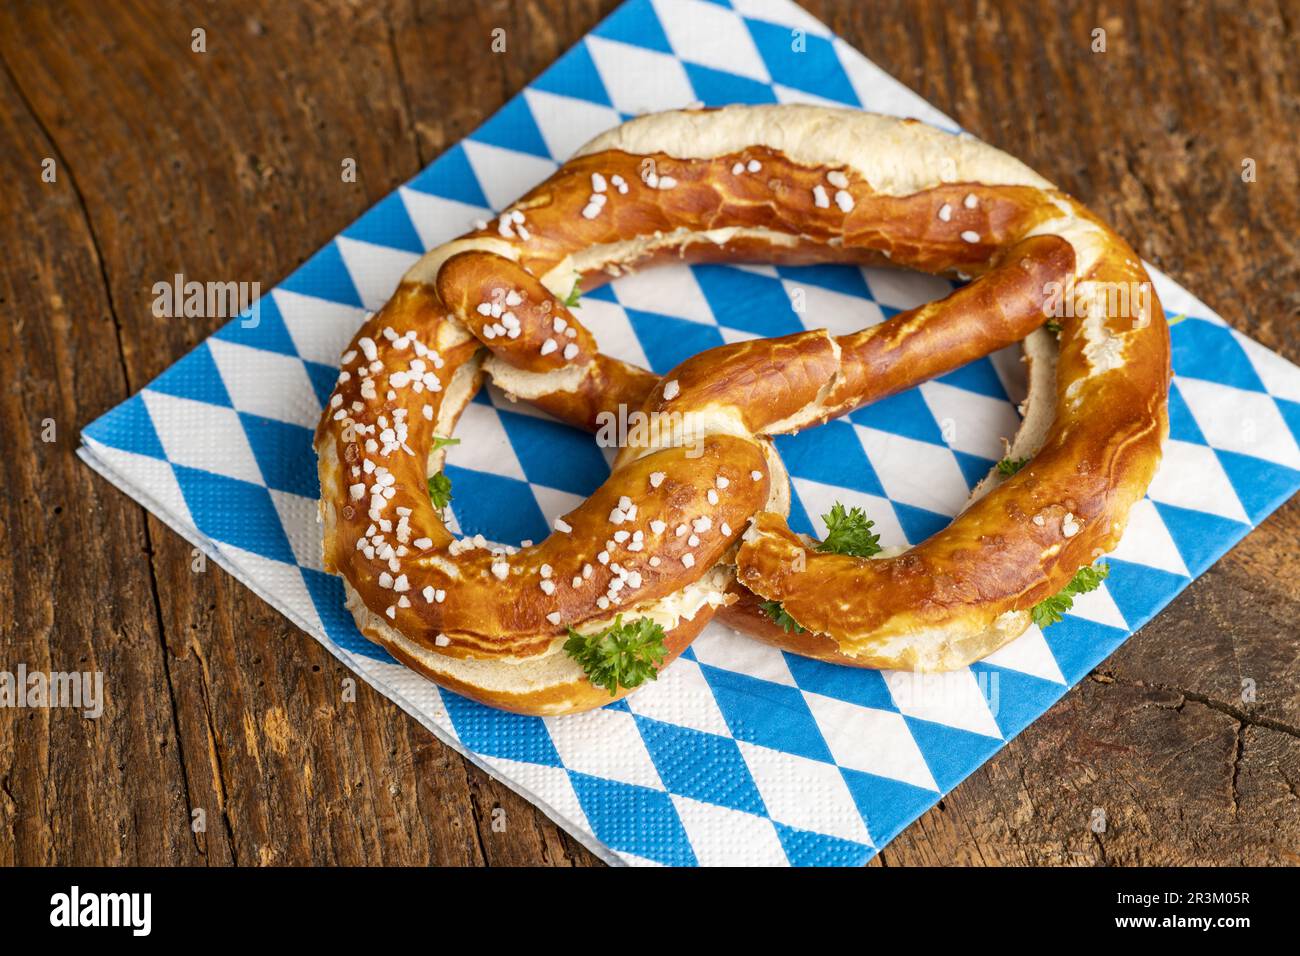 Bavarian butter pretzel on wood Stock Photo